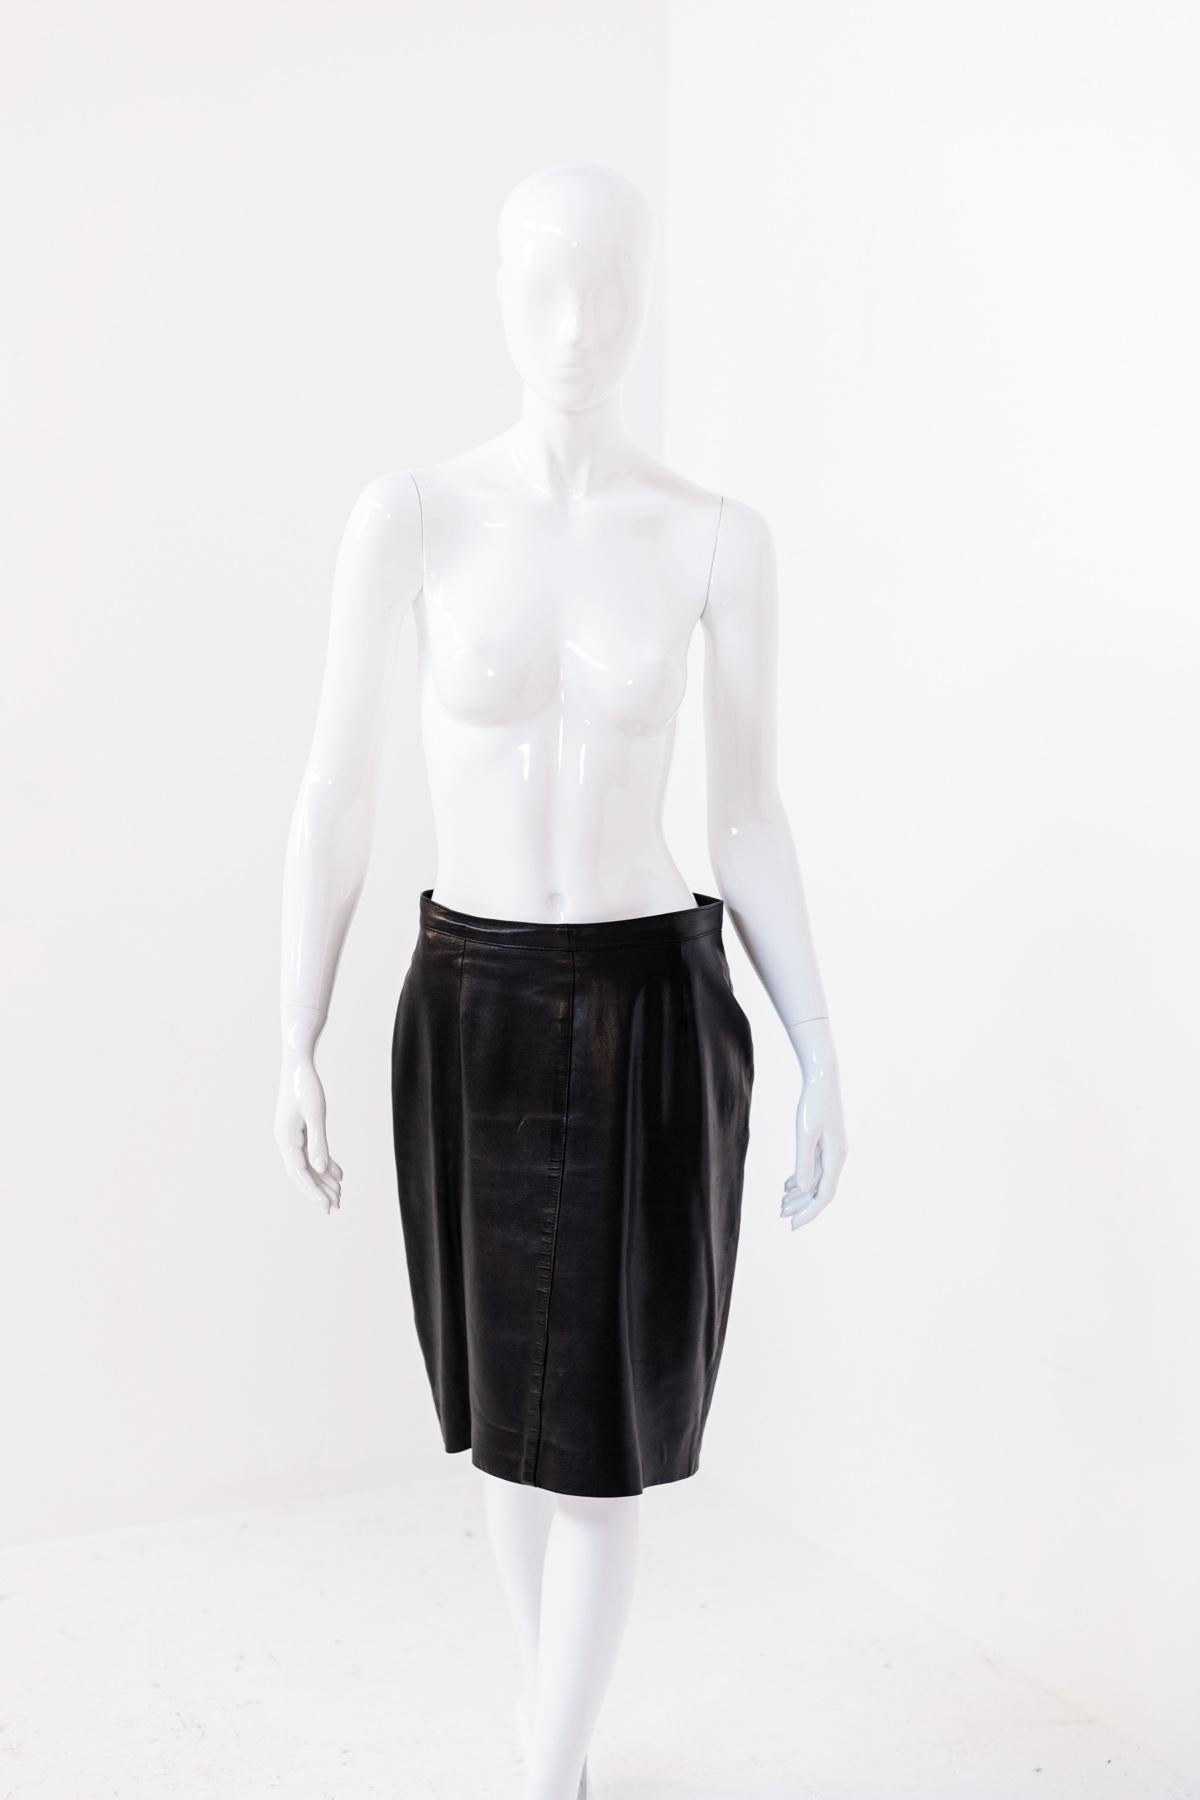 Sensual Vintage Black Leather Skirt For Sale 1